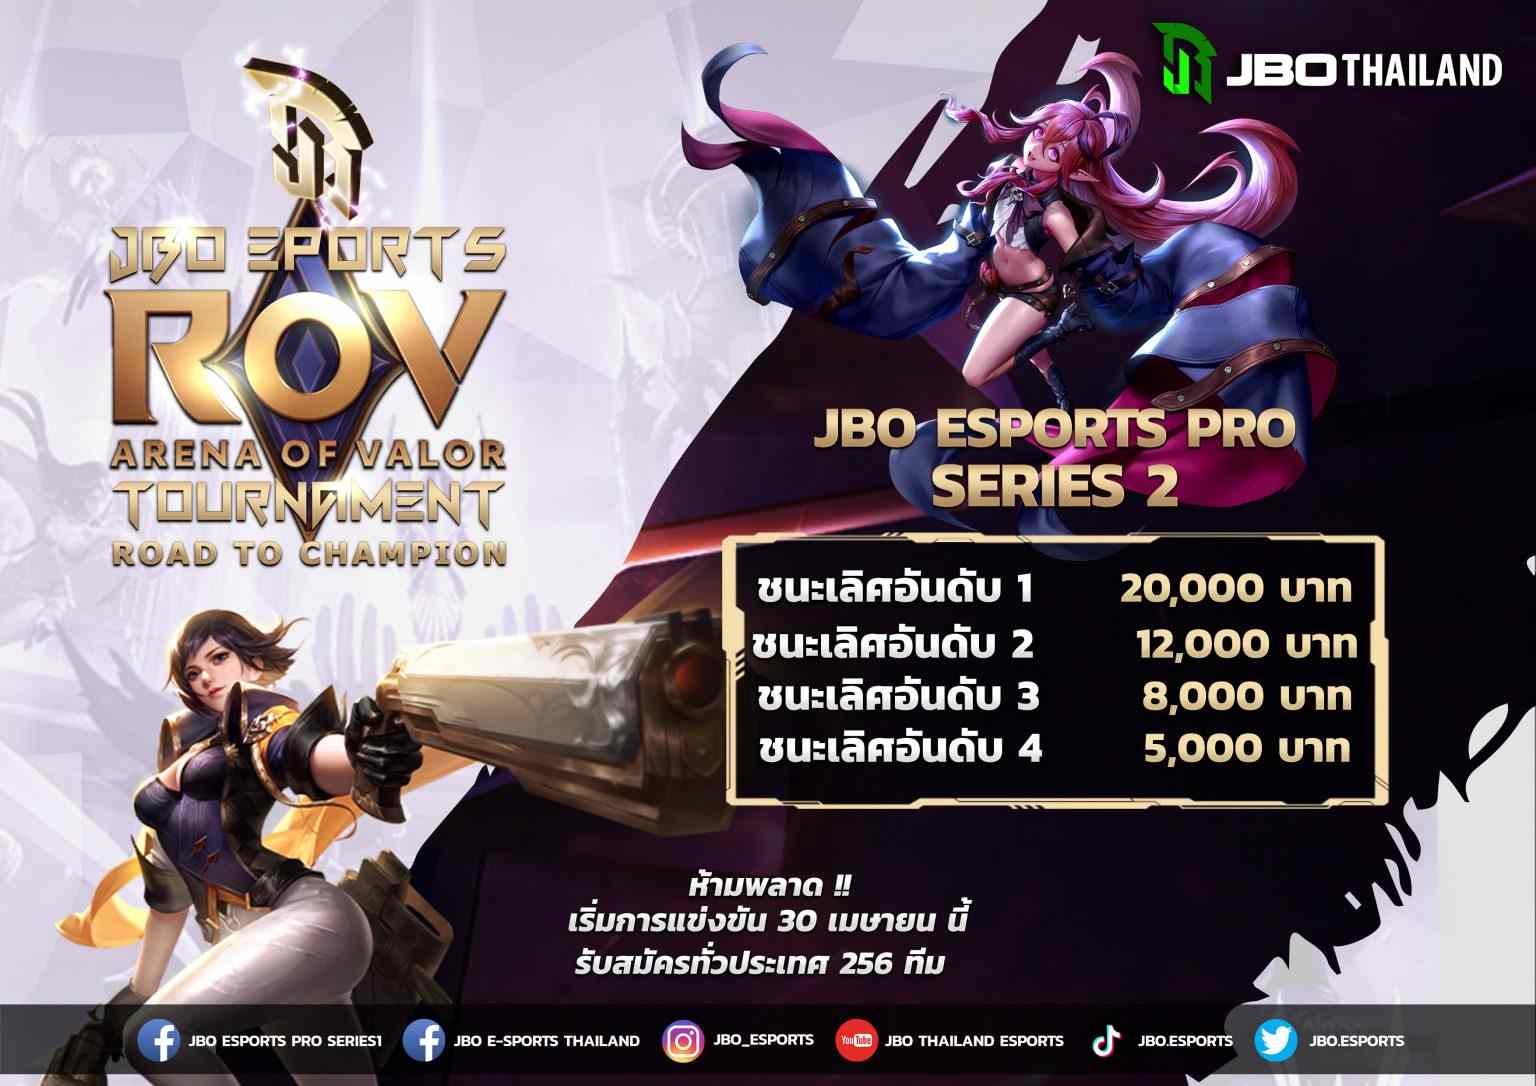 ROV JBO Esports Pro series 2